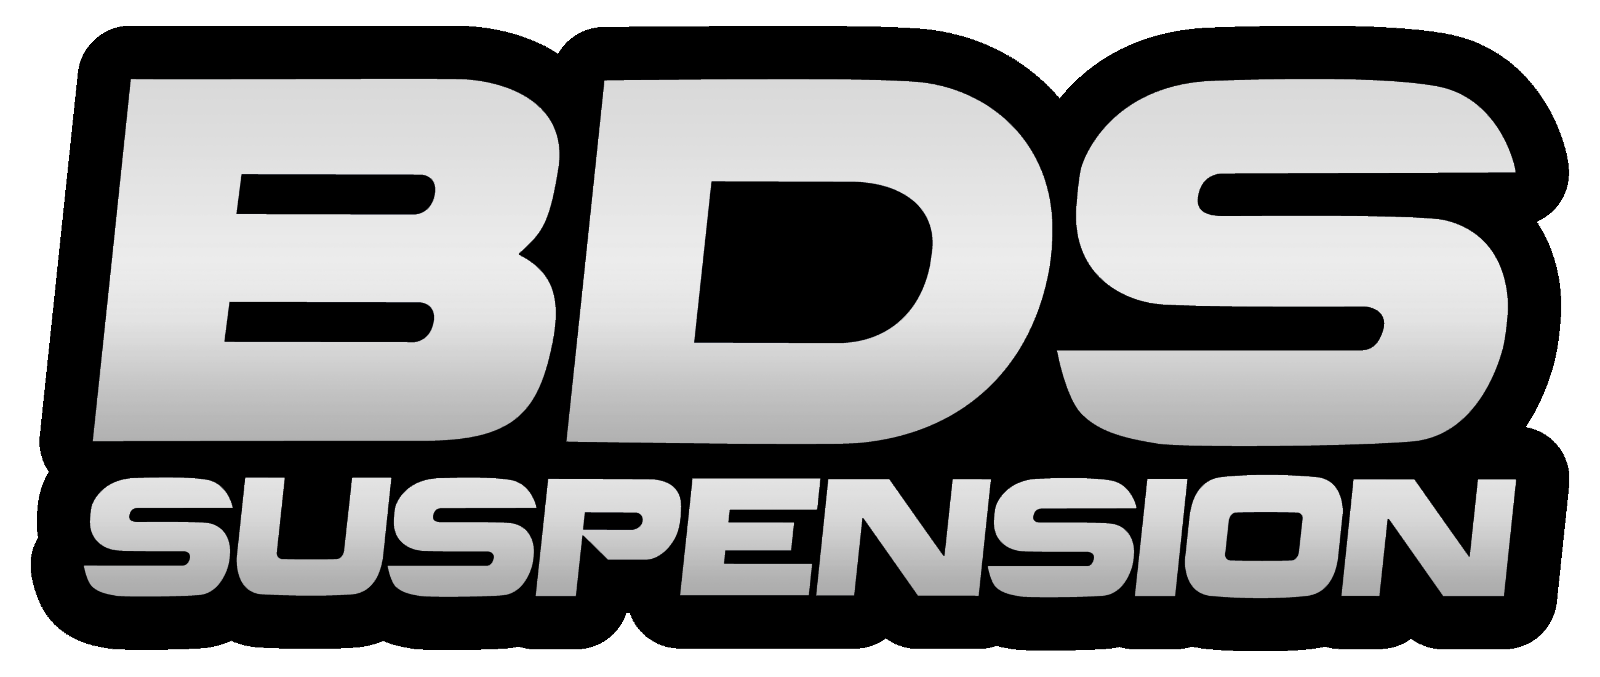 BDS BDS1800FSR 4 Inch Lift Kit Chevy Silverado or GMC Sierra 1500 (19-24) 4WD Gas